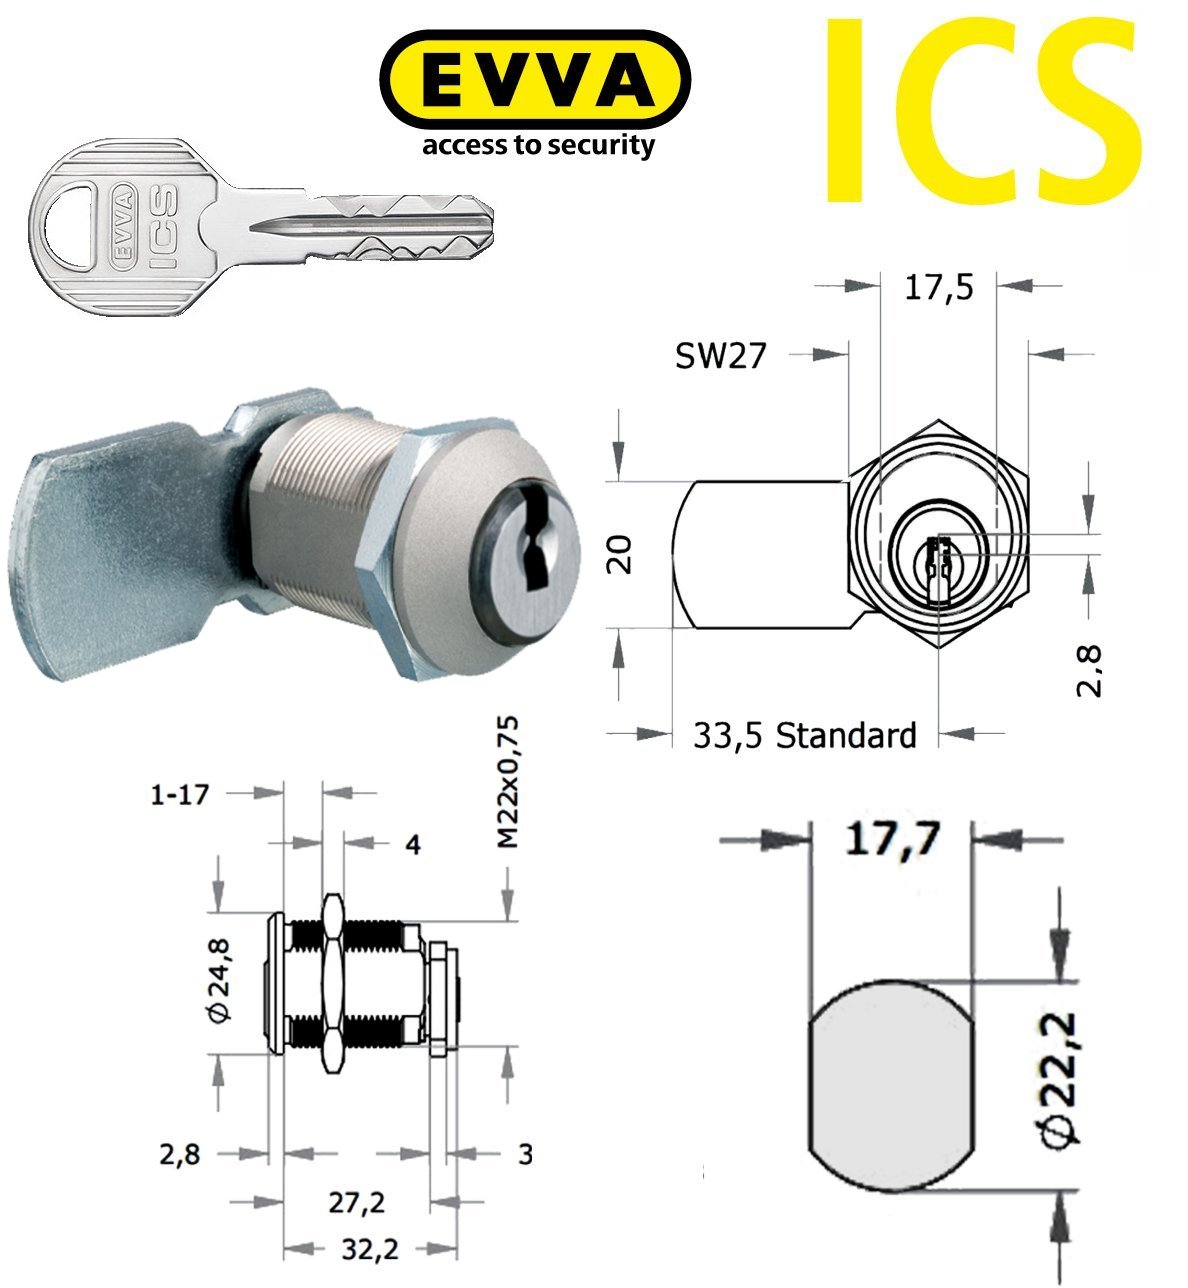 EVVA ICS MB19 Camlock high security with 2 keys